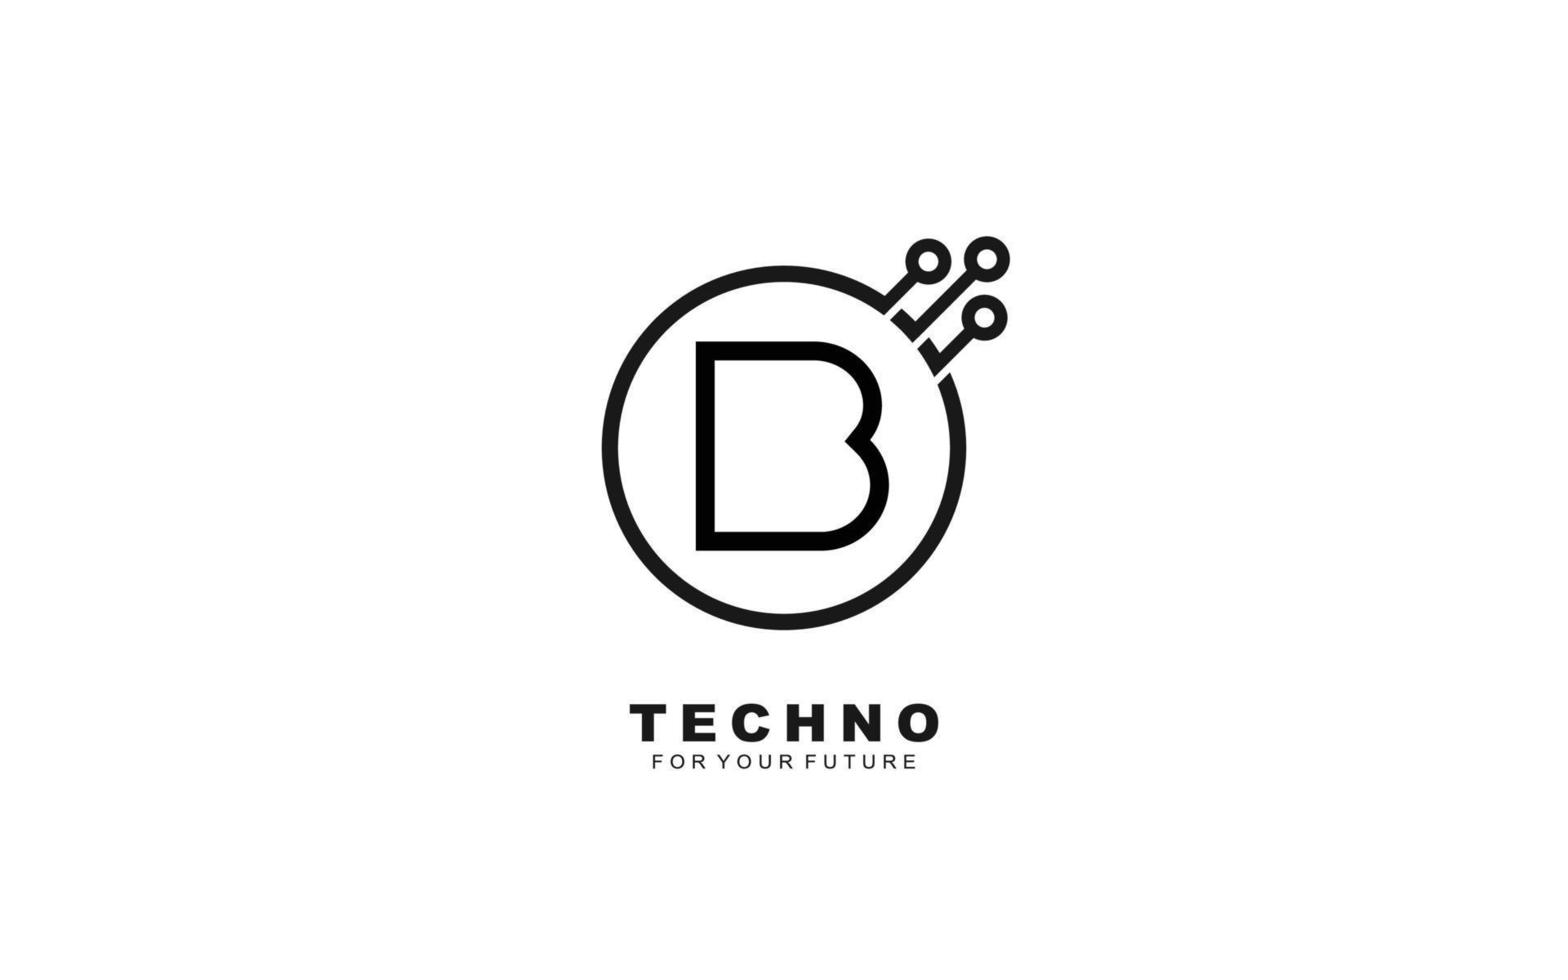 B logo TECHNO for identity. Letter template vector illustration for your brand